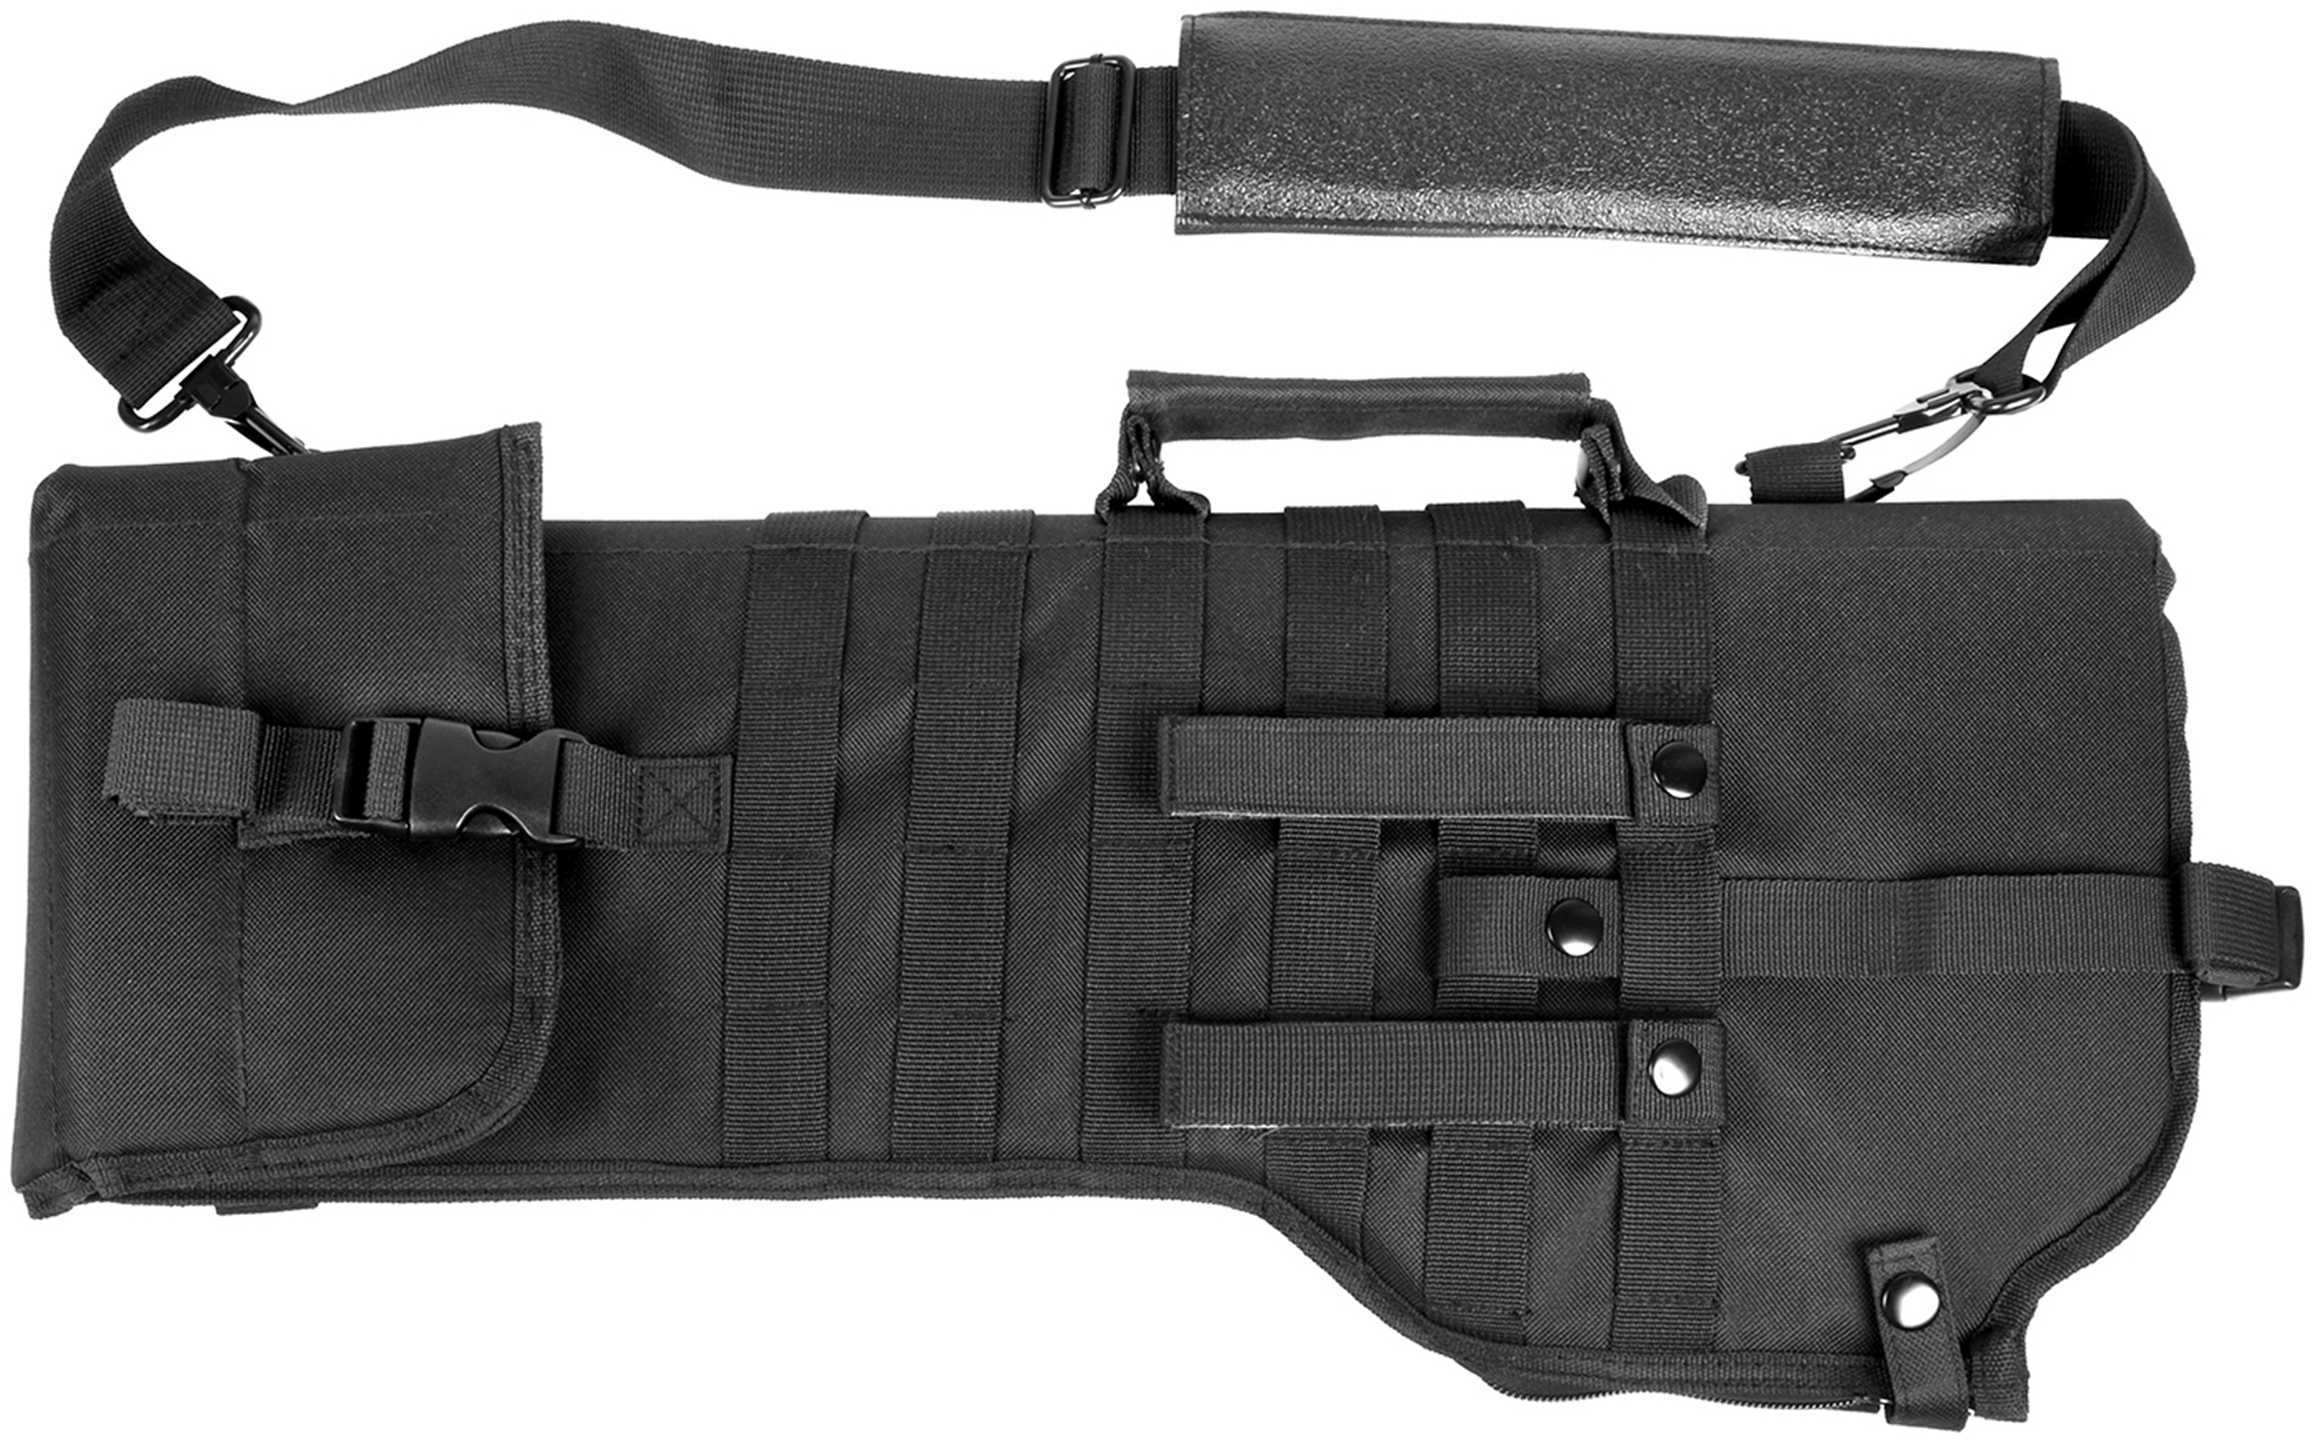 NCSTAR Rifle Scabbard Black Nylon 22" Length Six Metal D-Ring locations Includes Padded Shoulder Sling CVRSCB2919B